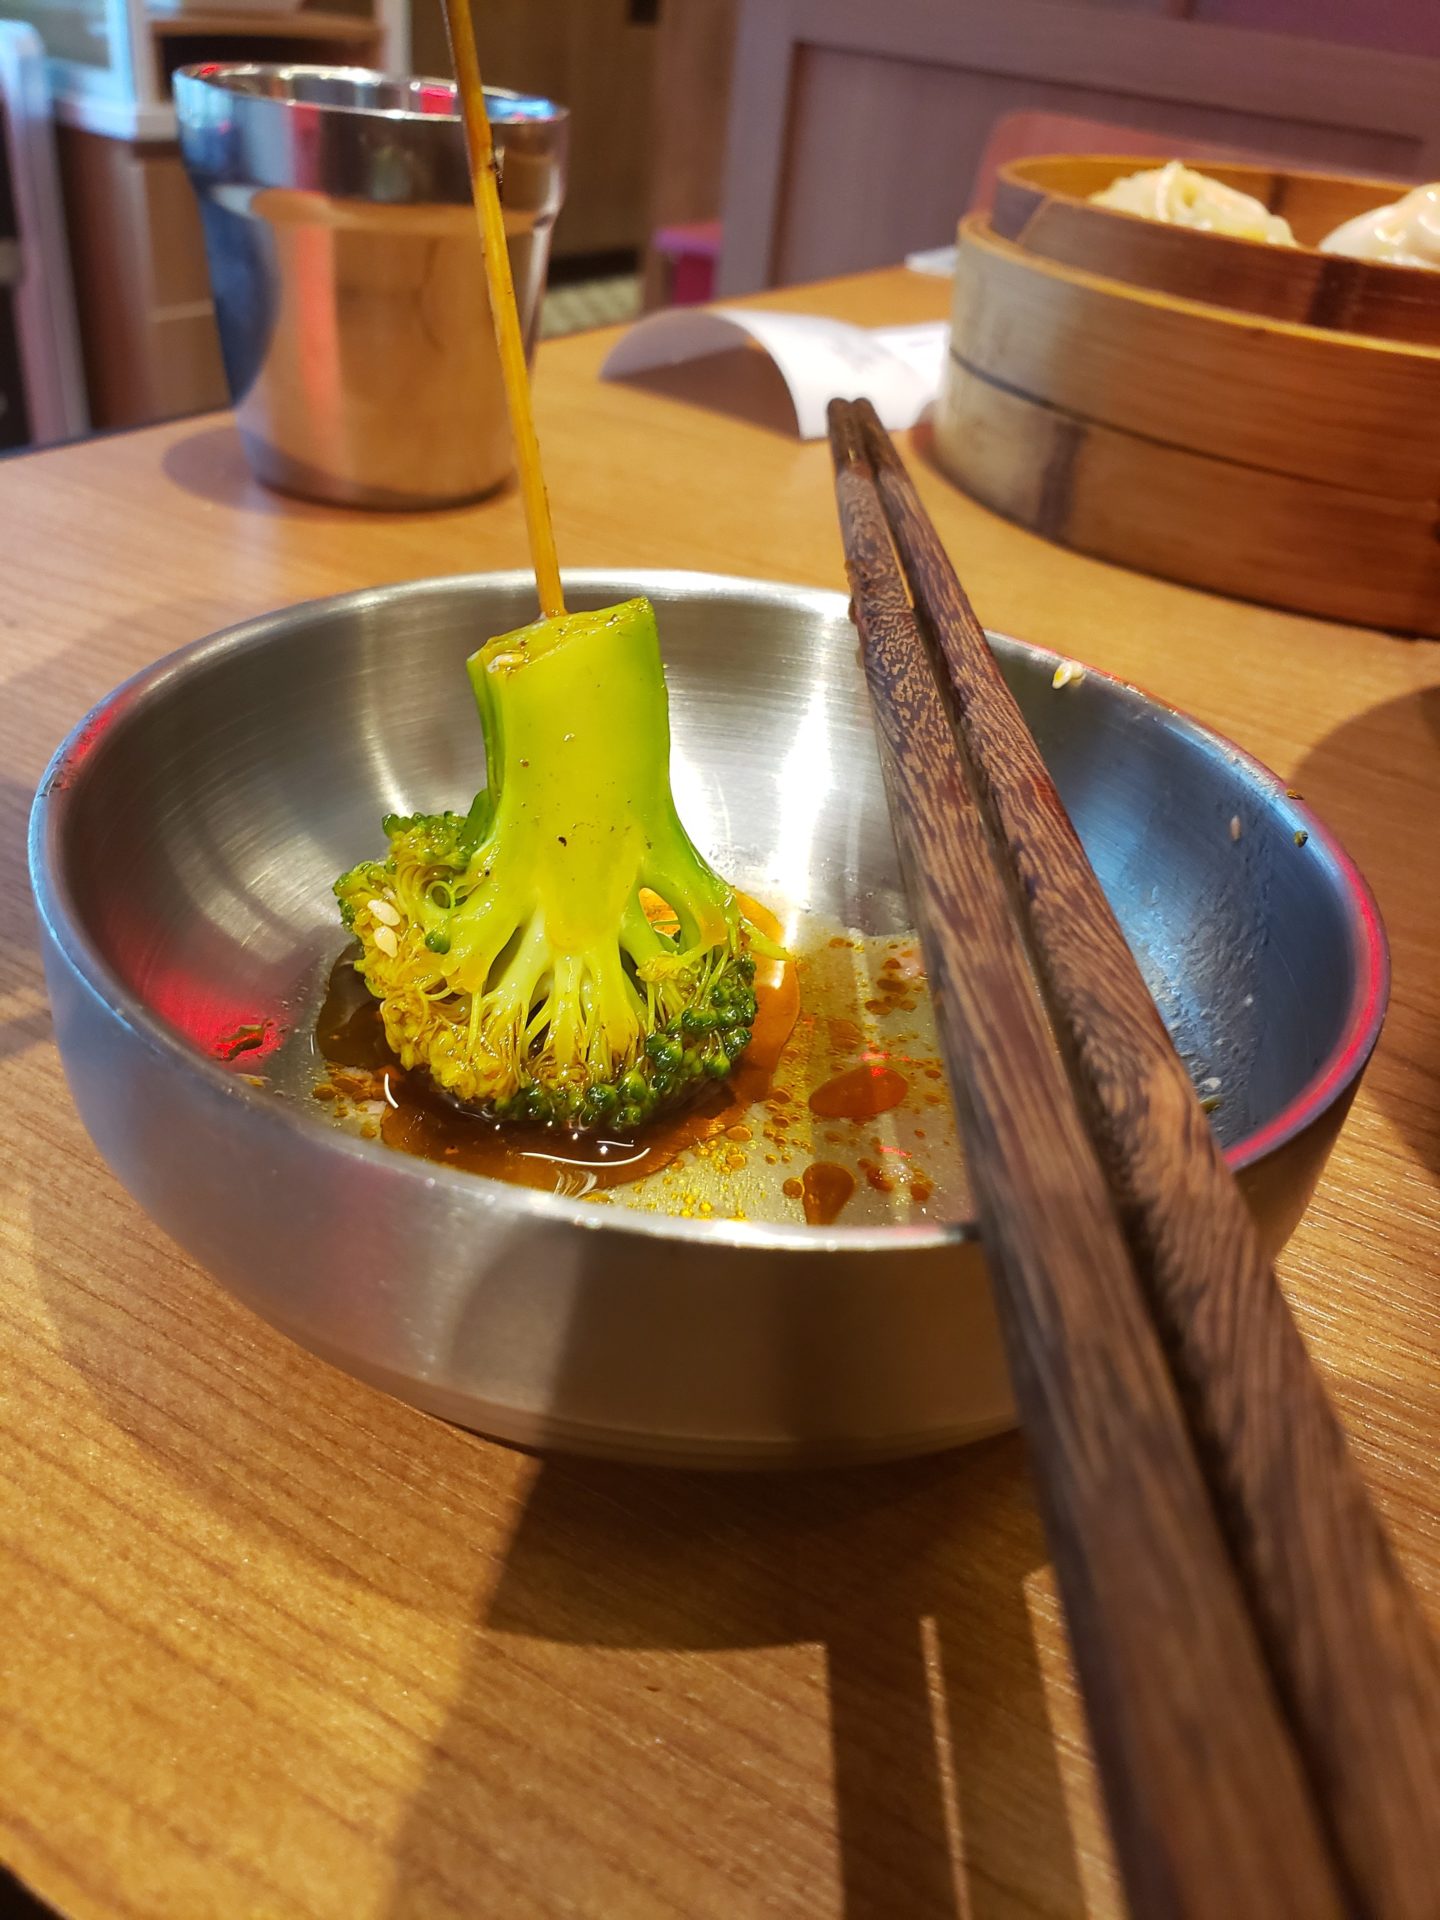 a bowl of broccoli with chopsticks